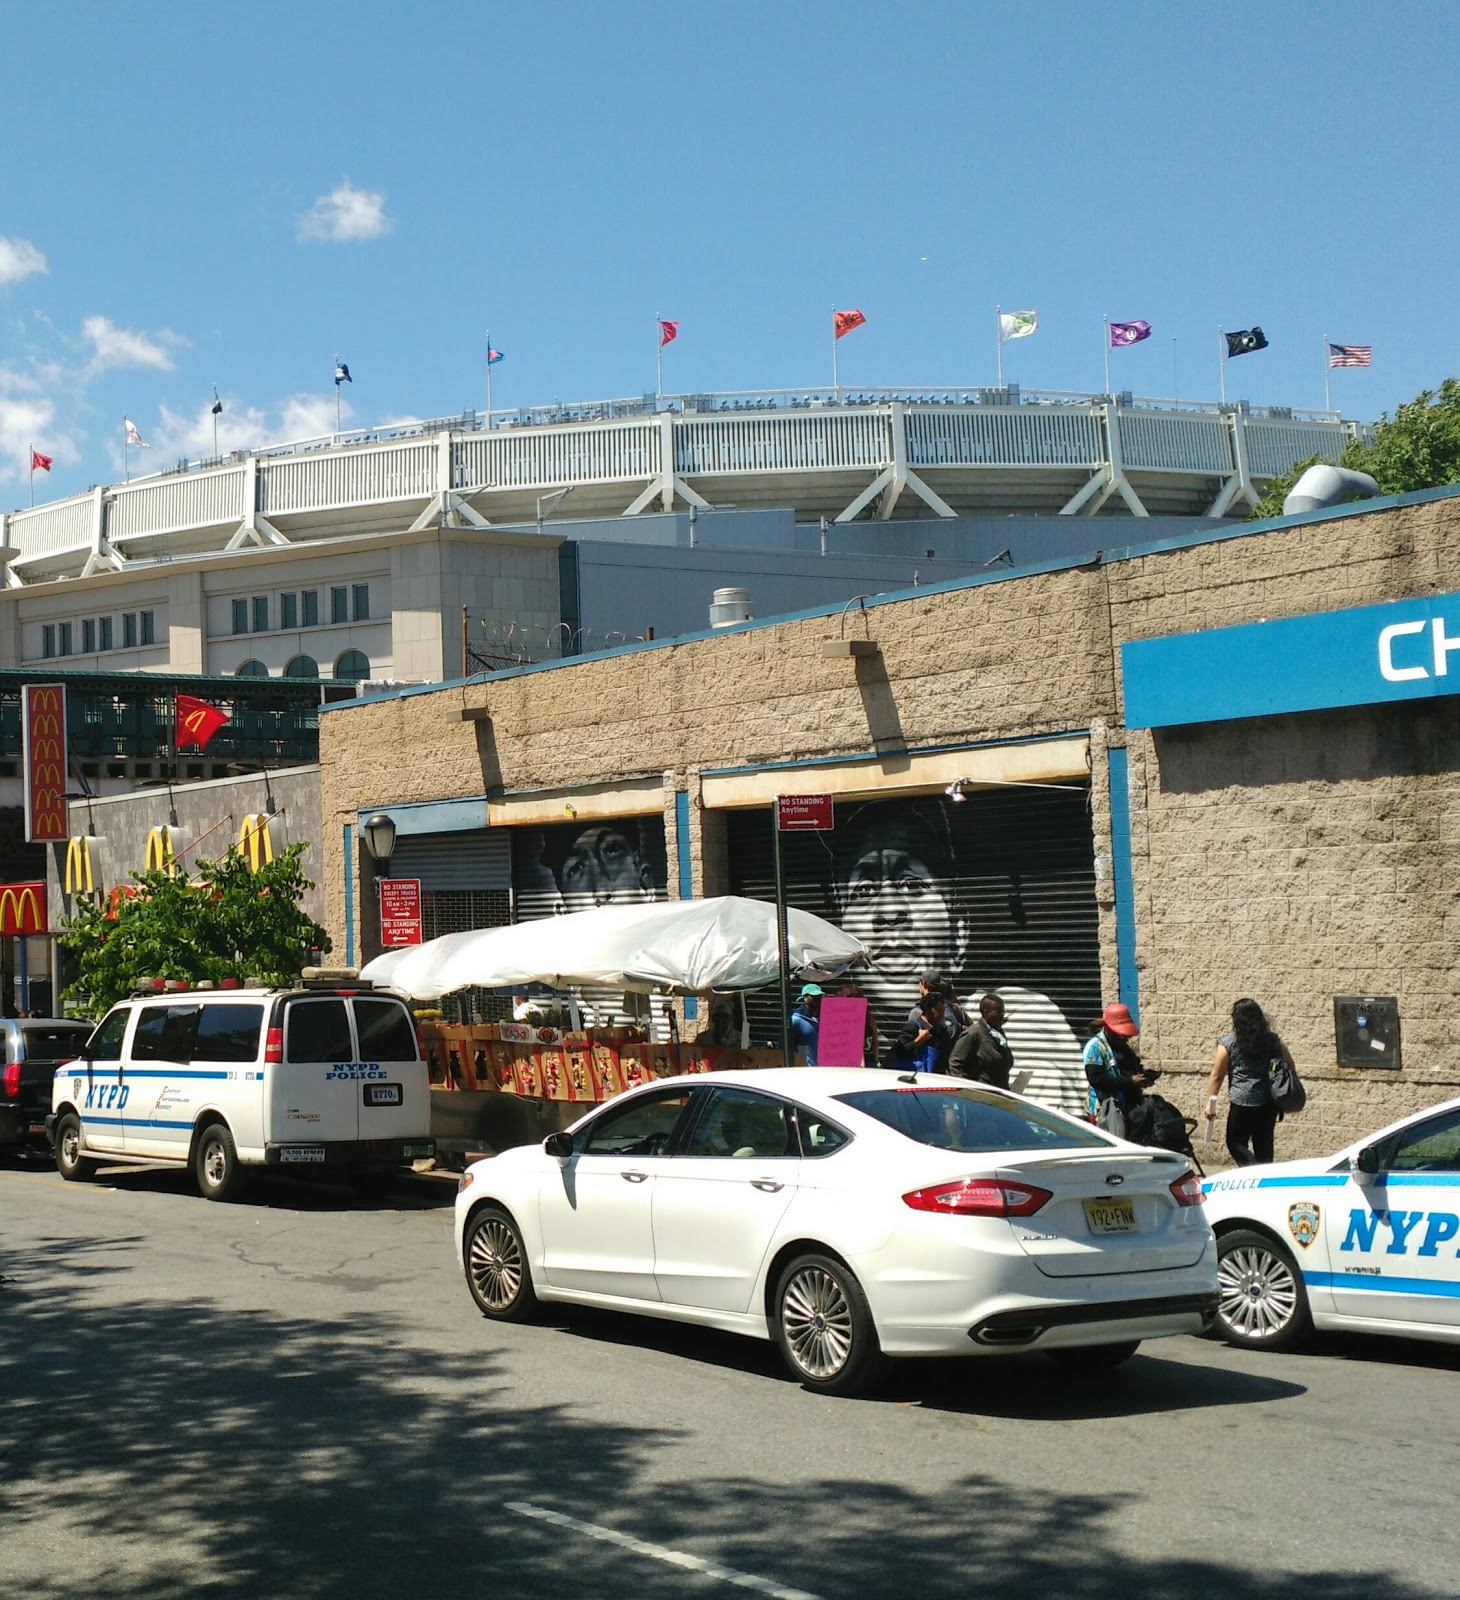 Photo of 161 St - Yankee Stadium in New York City, New York, United States - 2 Picture of Point of interest, Establishment, Transit station, Subway station